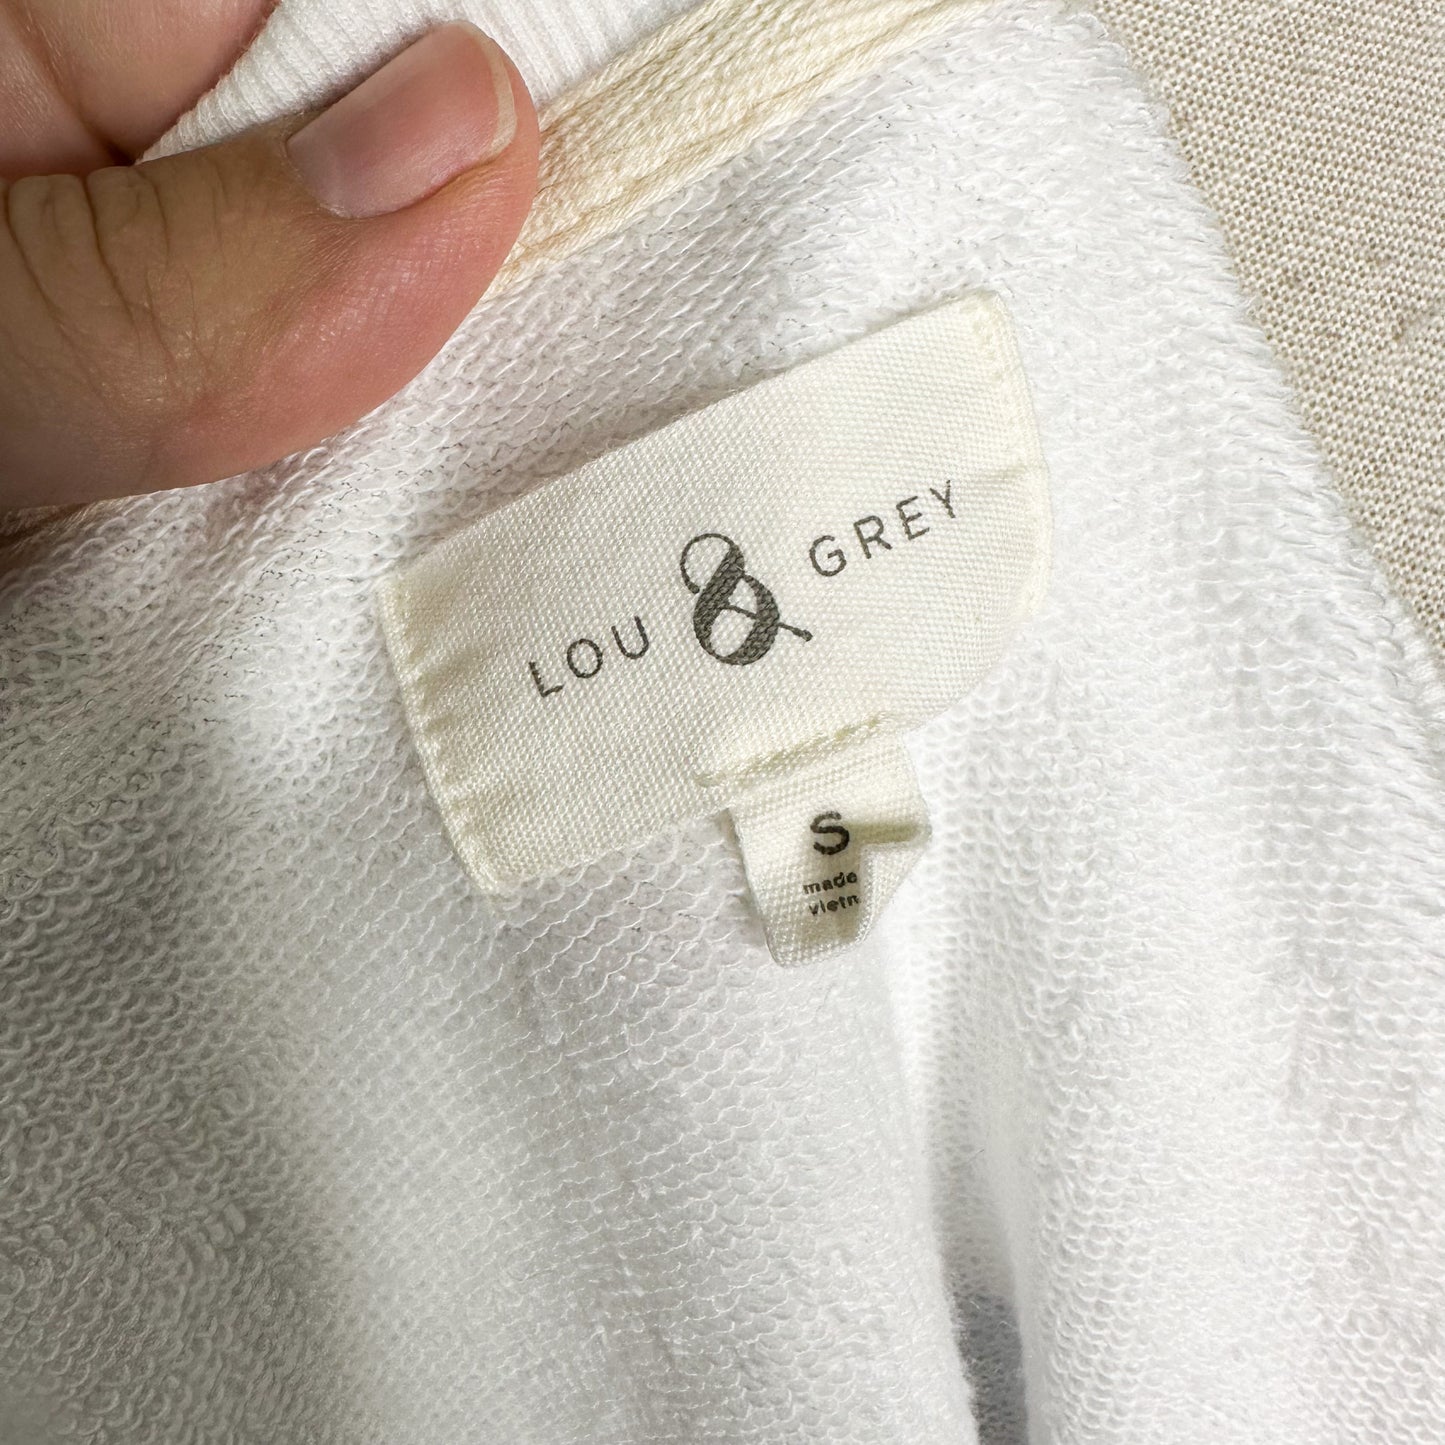 Lou & Grey Star Cozy Cotton Terry Sweatshirt Tee Size Small